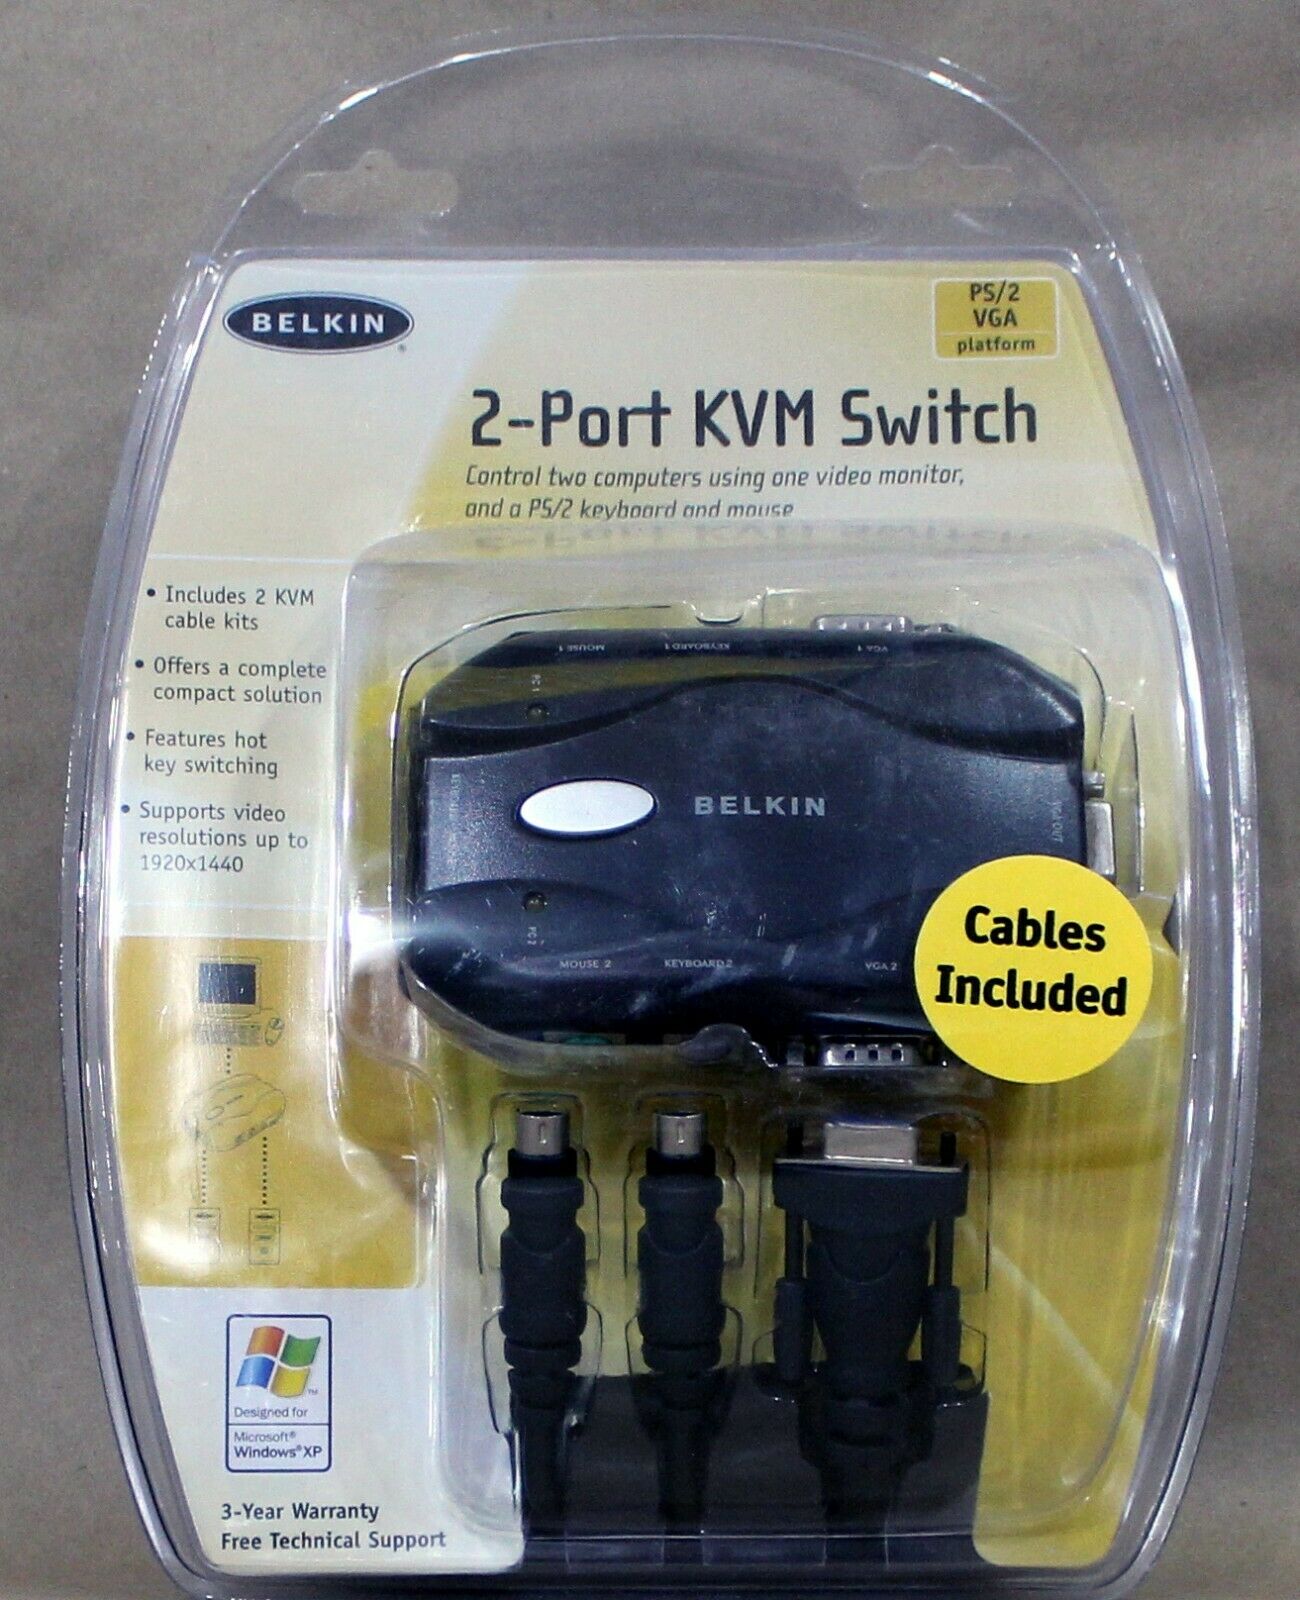 New, Sealed Belkin F1dj102p-b 2-port Kvm Switch W/ 6 Ft Cable Kit Ps/2-vga